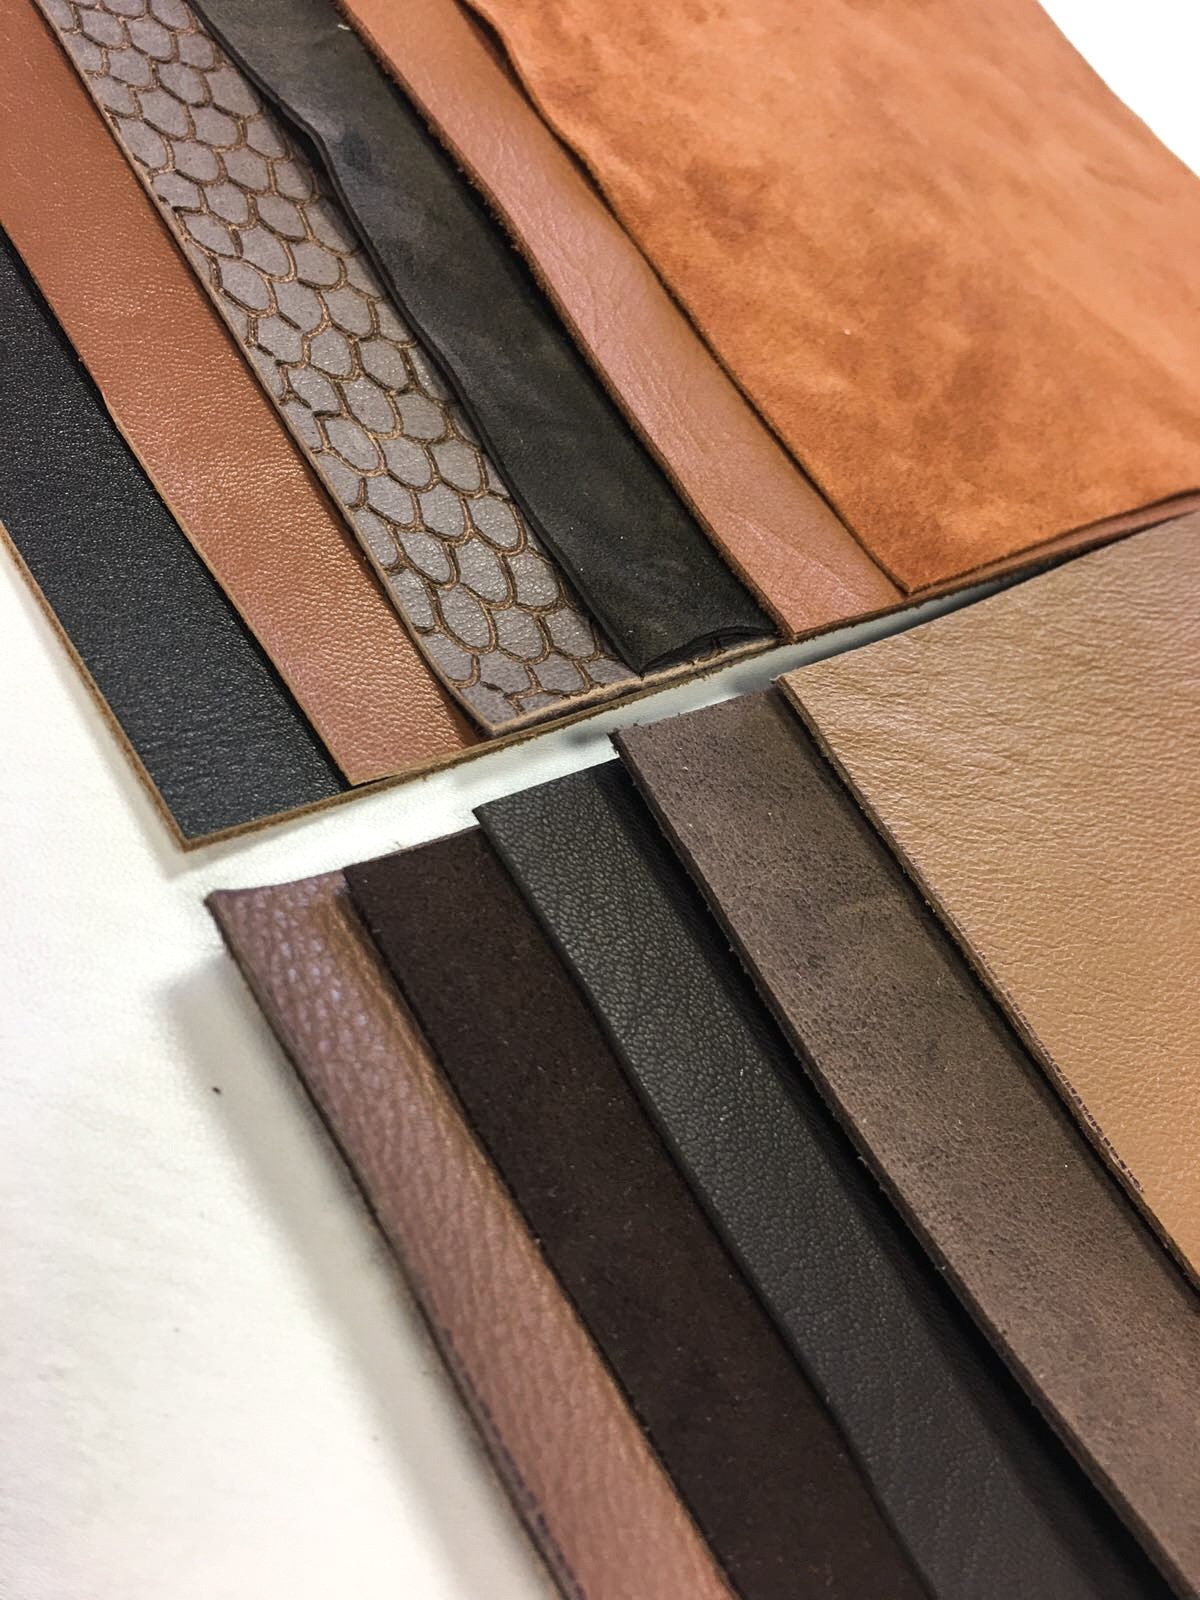 Engrave Leather with Cricut: Custom Bookmarks! - Jennifer Maker